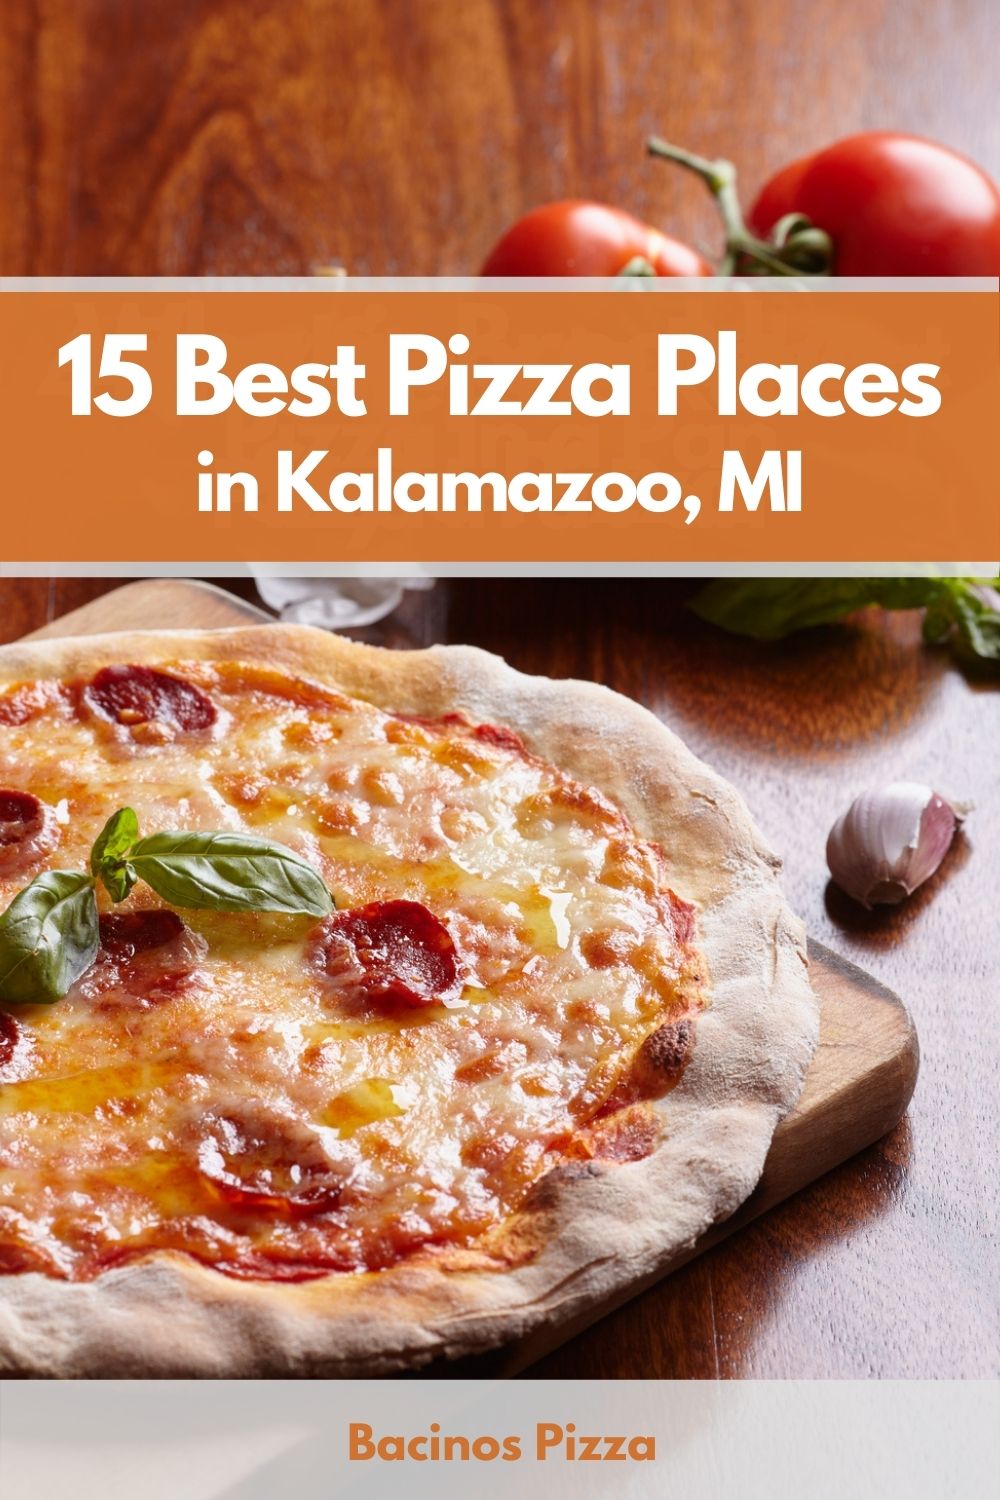 15 Best Pizza Places in Kalamazoo, MI pin 2